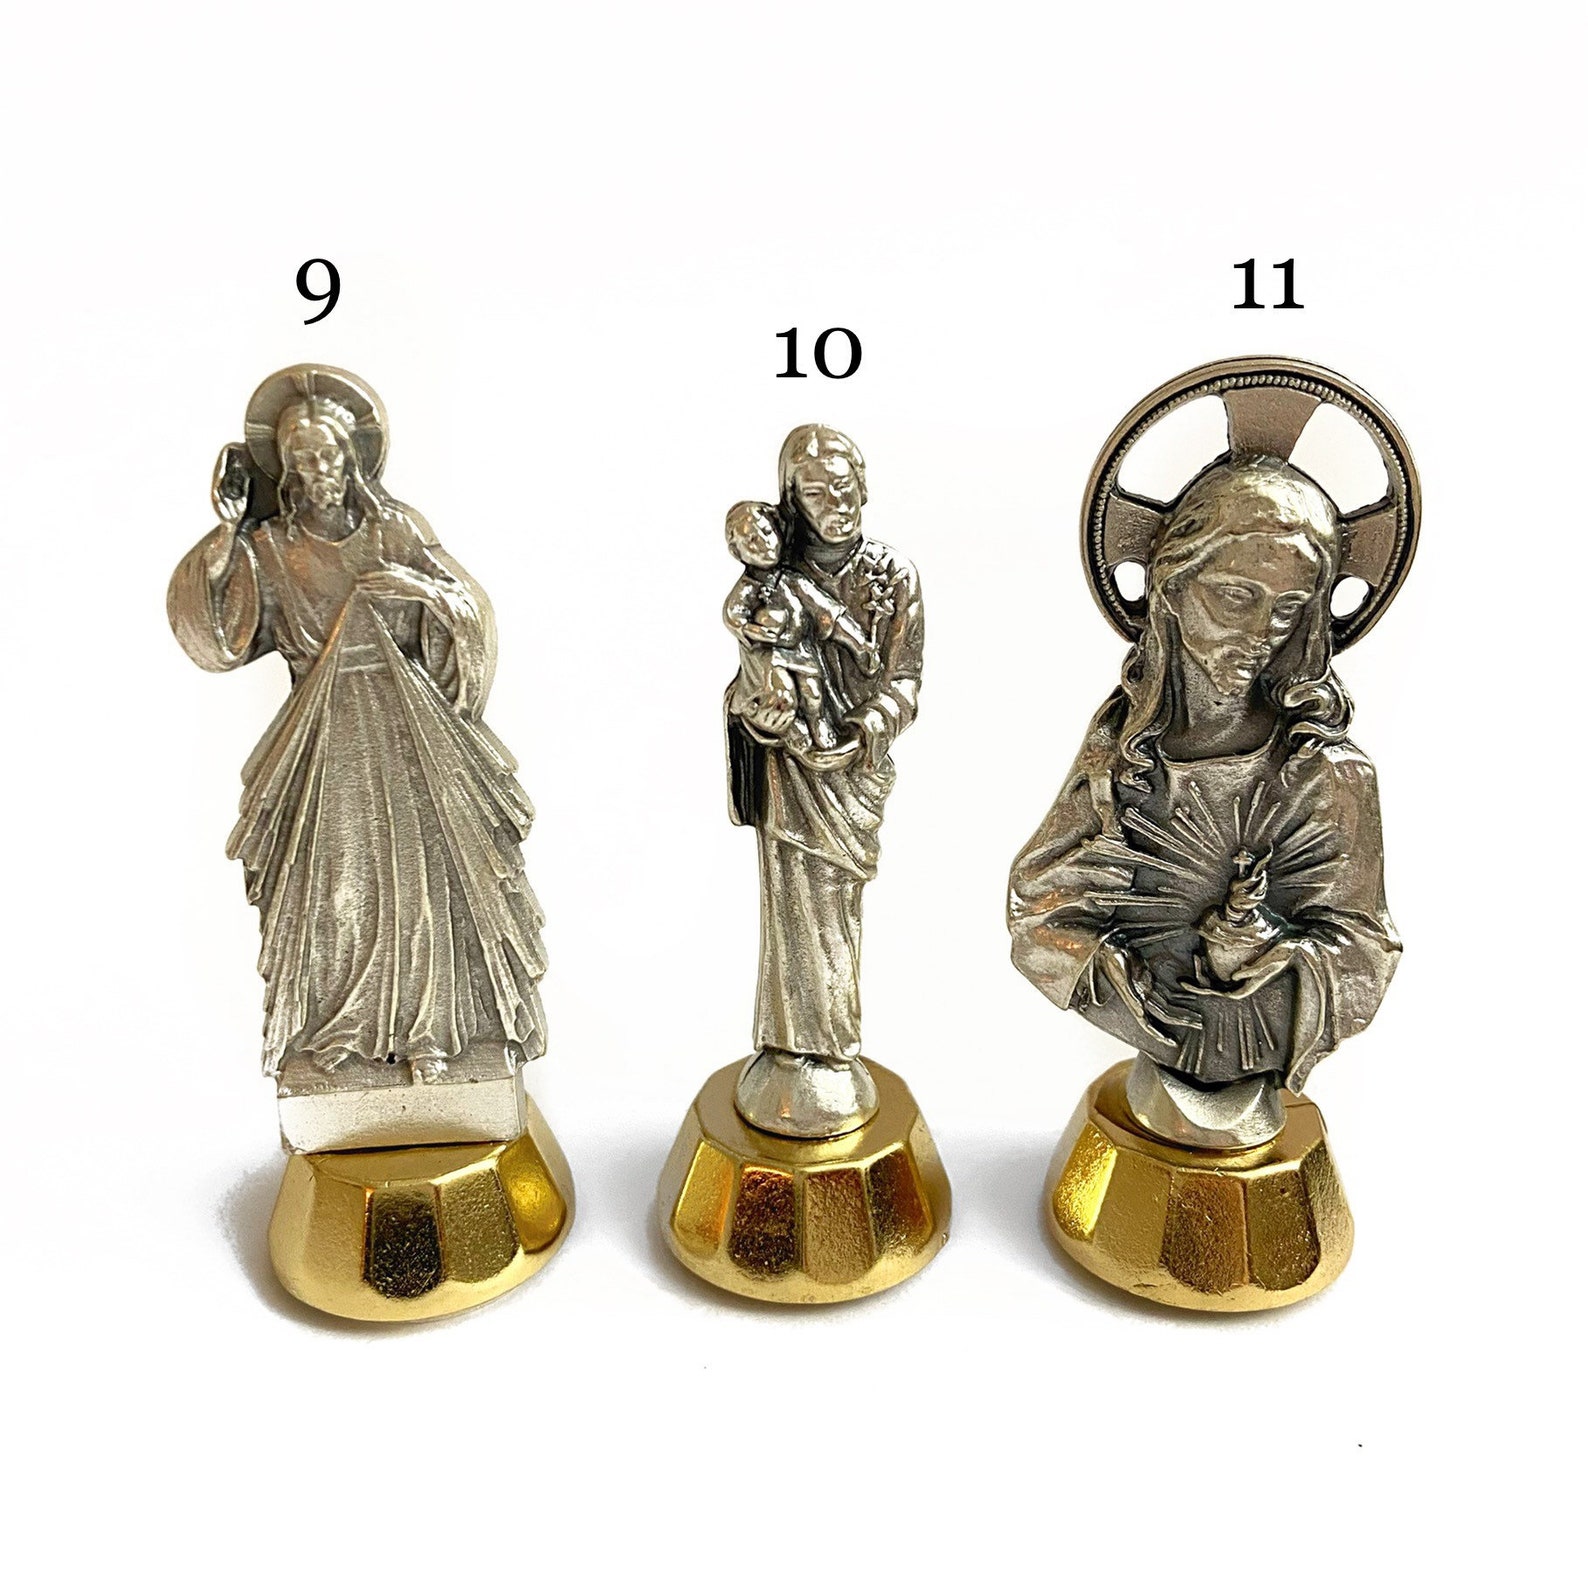 Mini Auto Saint Statues Catholic Gifts Made in Italy | Etsy